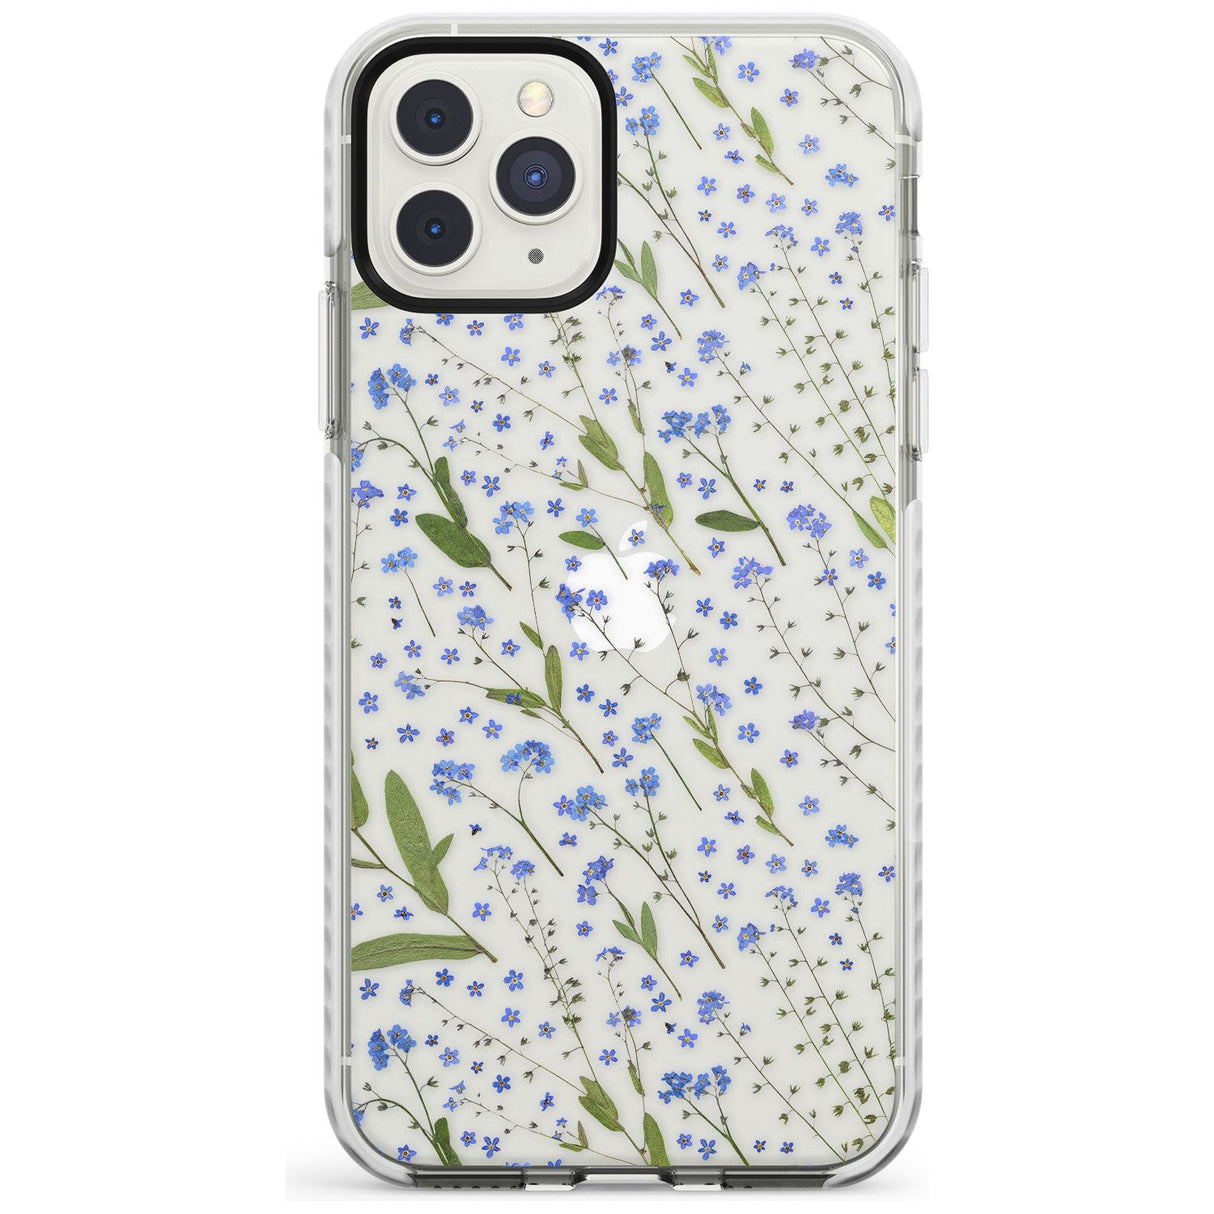 Blue Wild Flower Design Impact Phone Case for iPhone 11 Pro Max